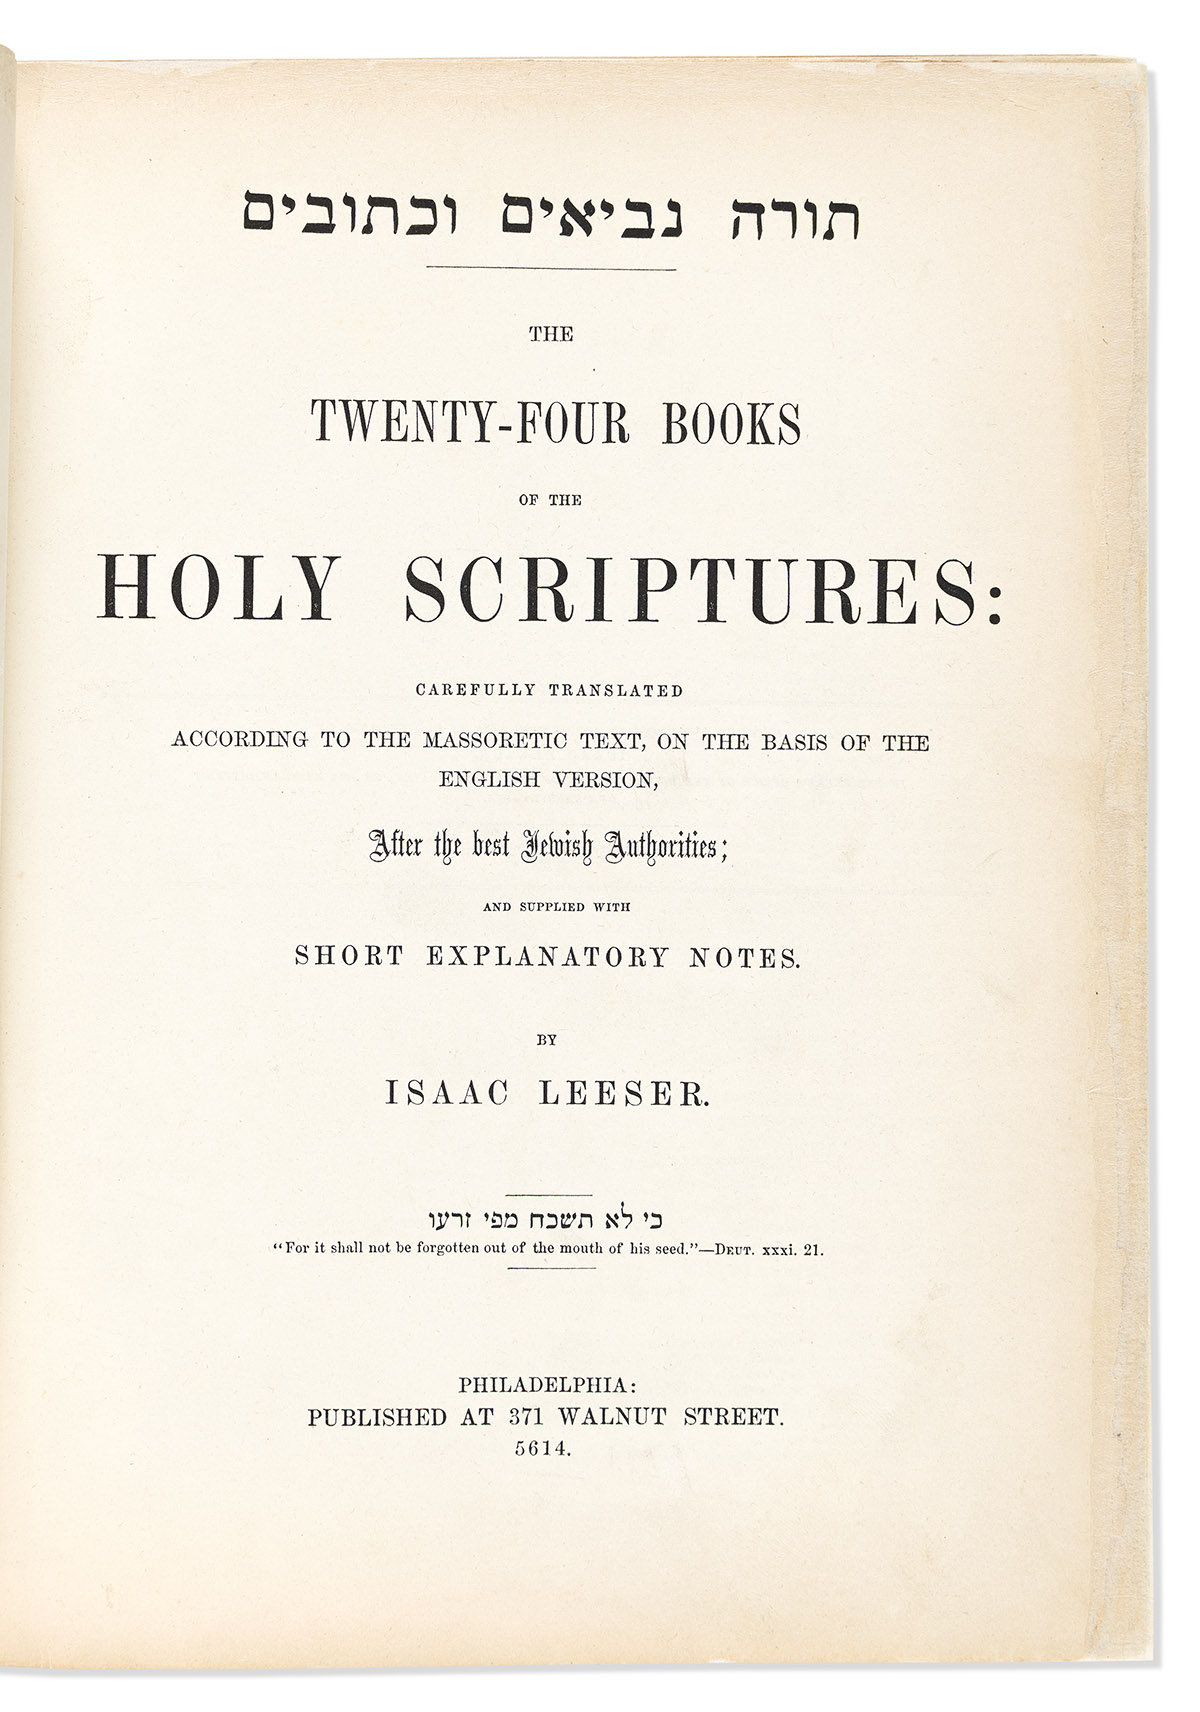 (JUDAICA.) Isaac Leeser, translator. The Twenty-Four Books of the Holy Scriptures, Carefully Translated . . .